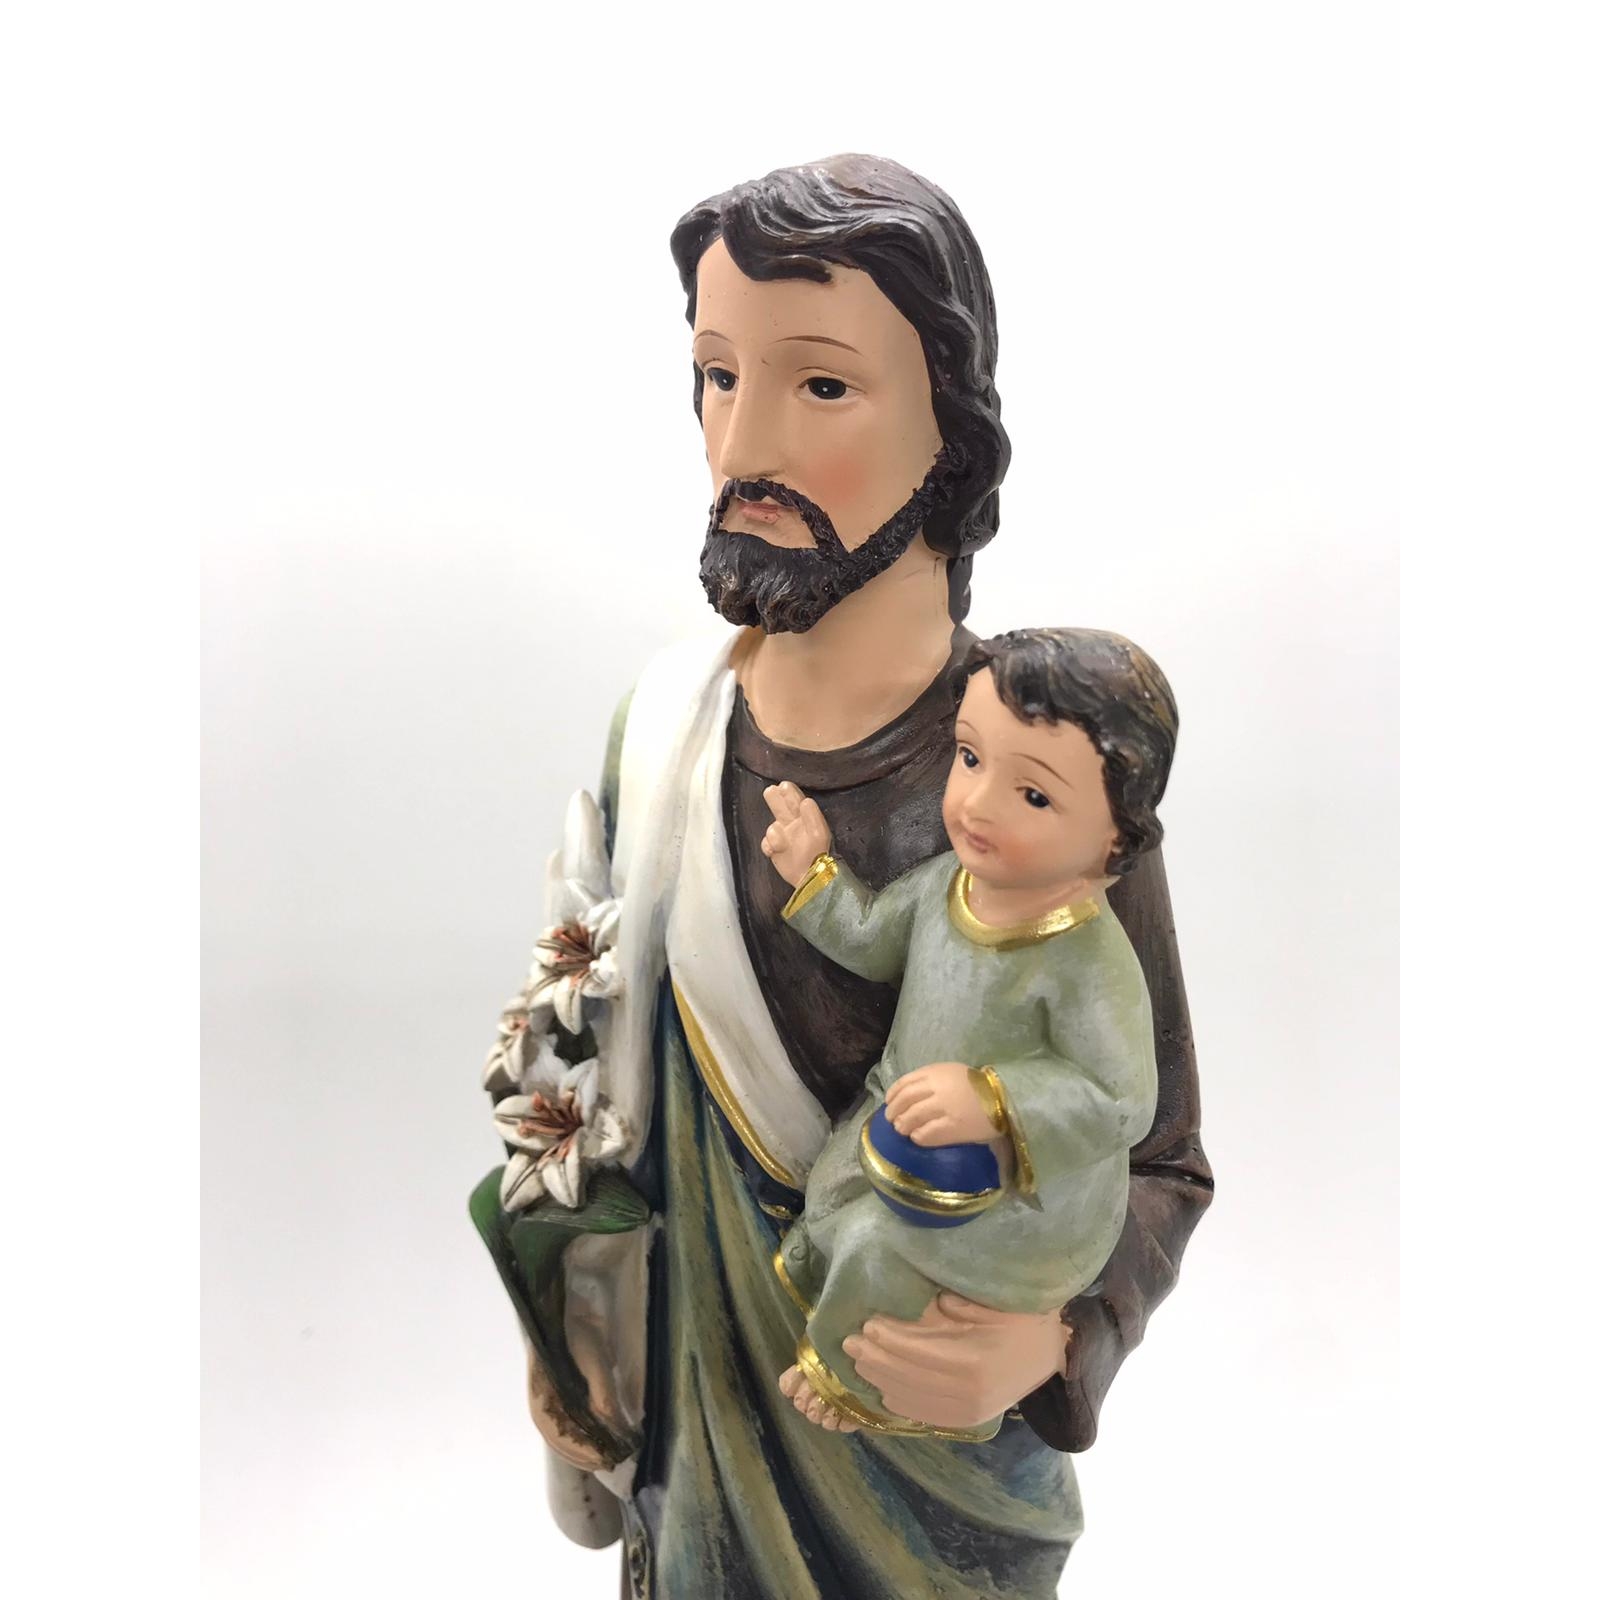 St Joseph with Child Jesus, 12"